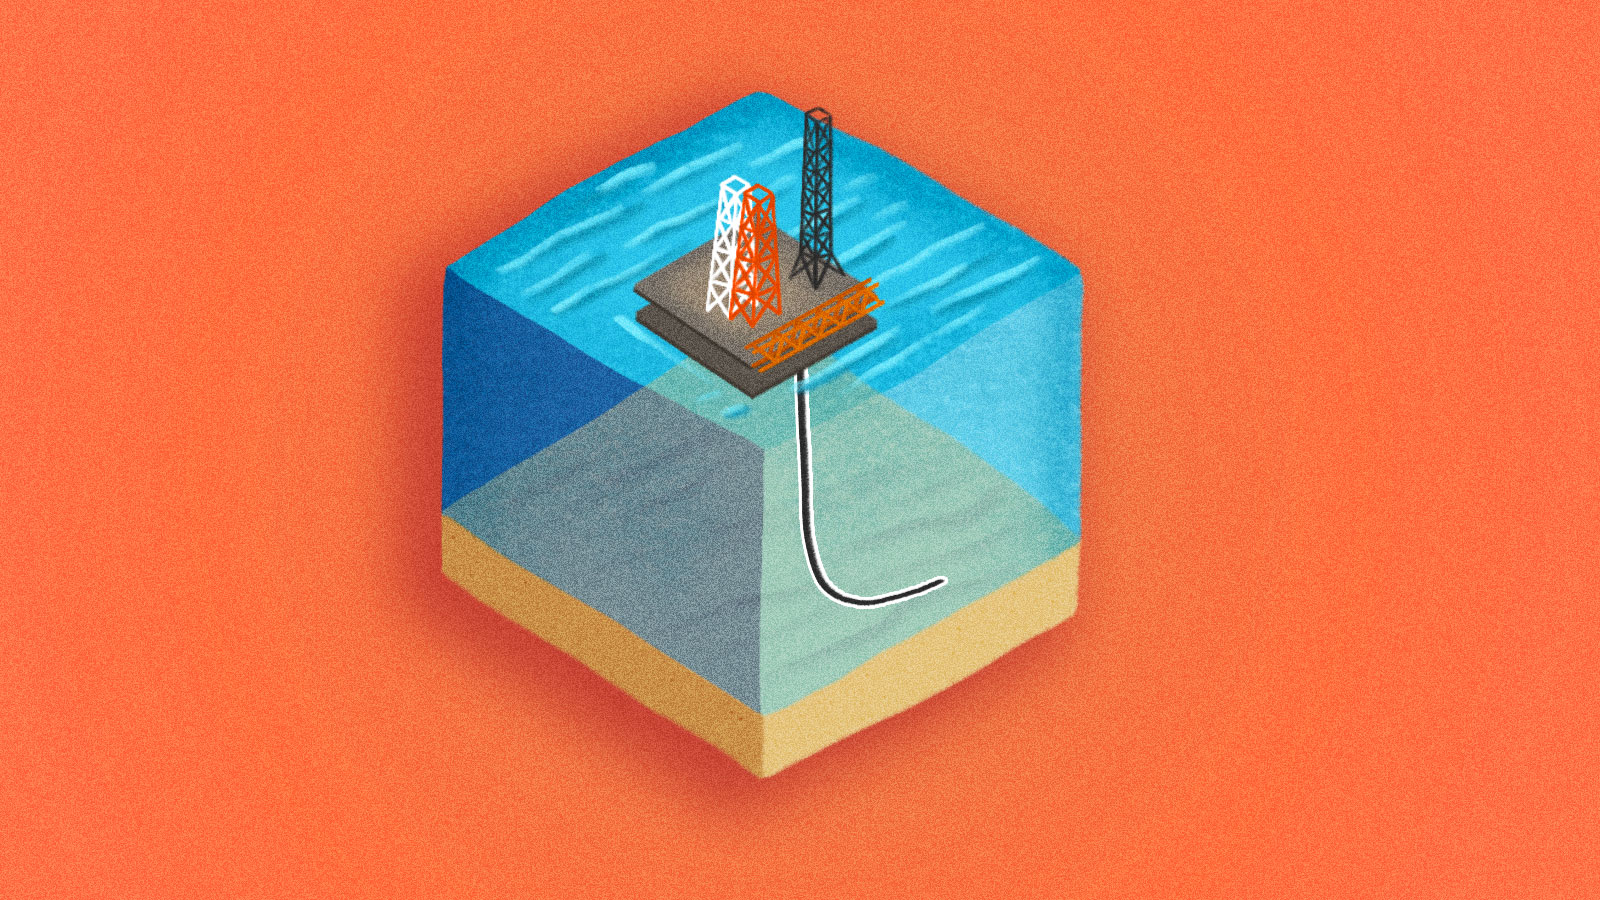 An illustration of a deep sea mining rig